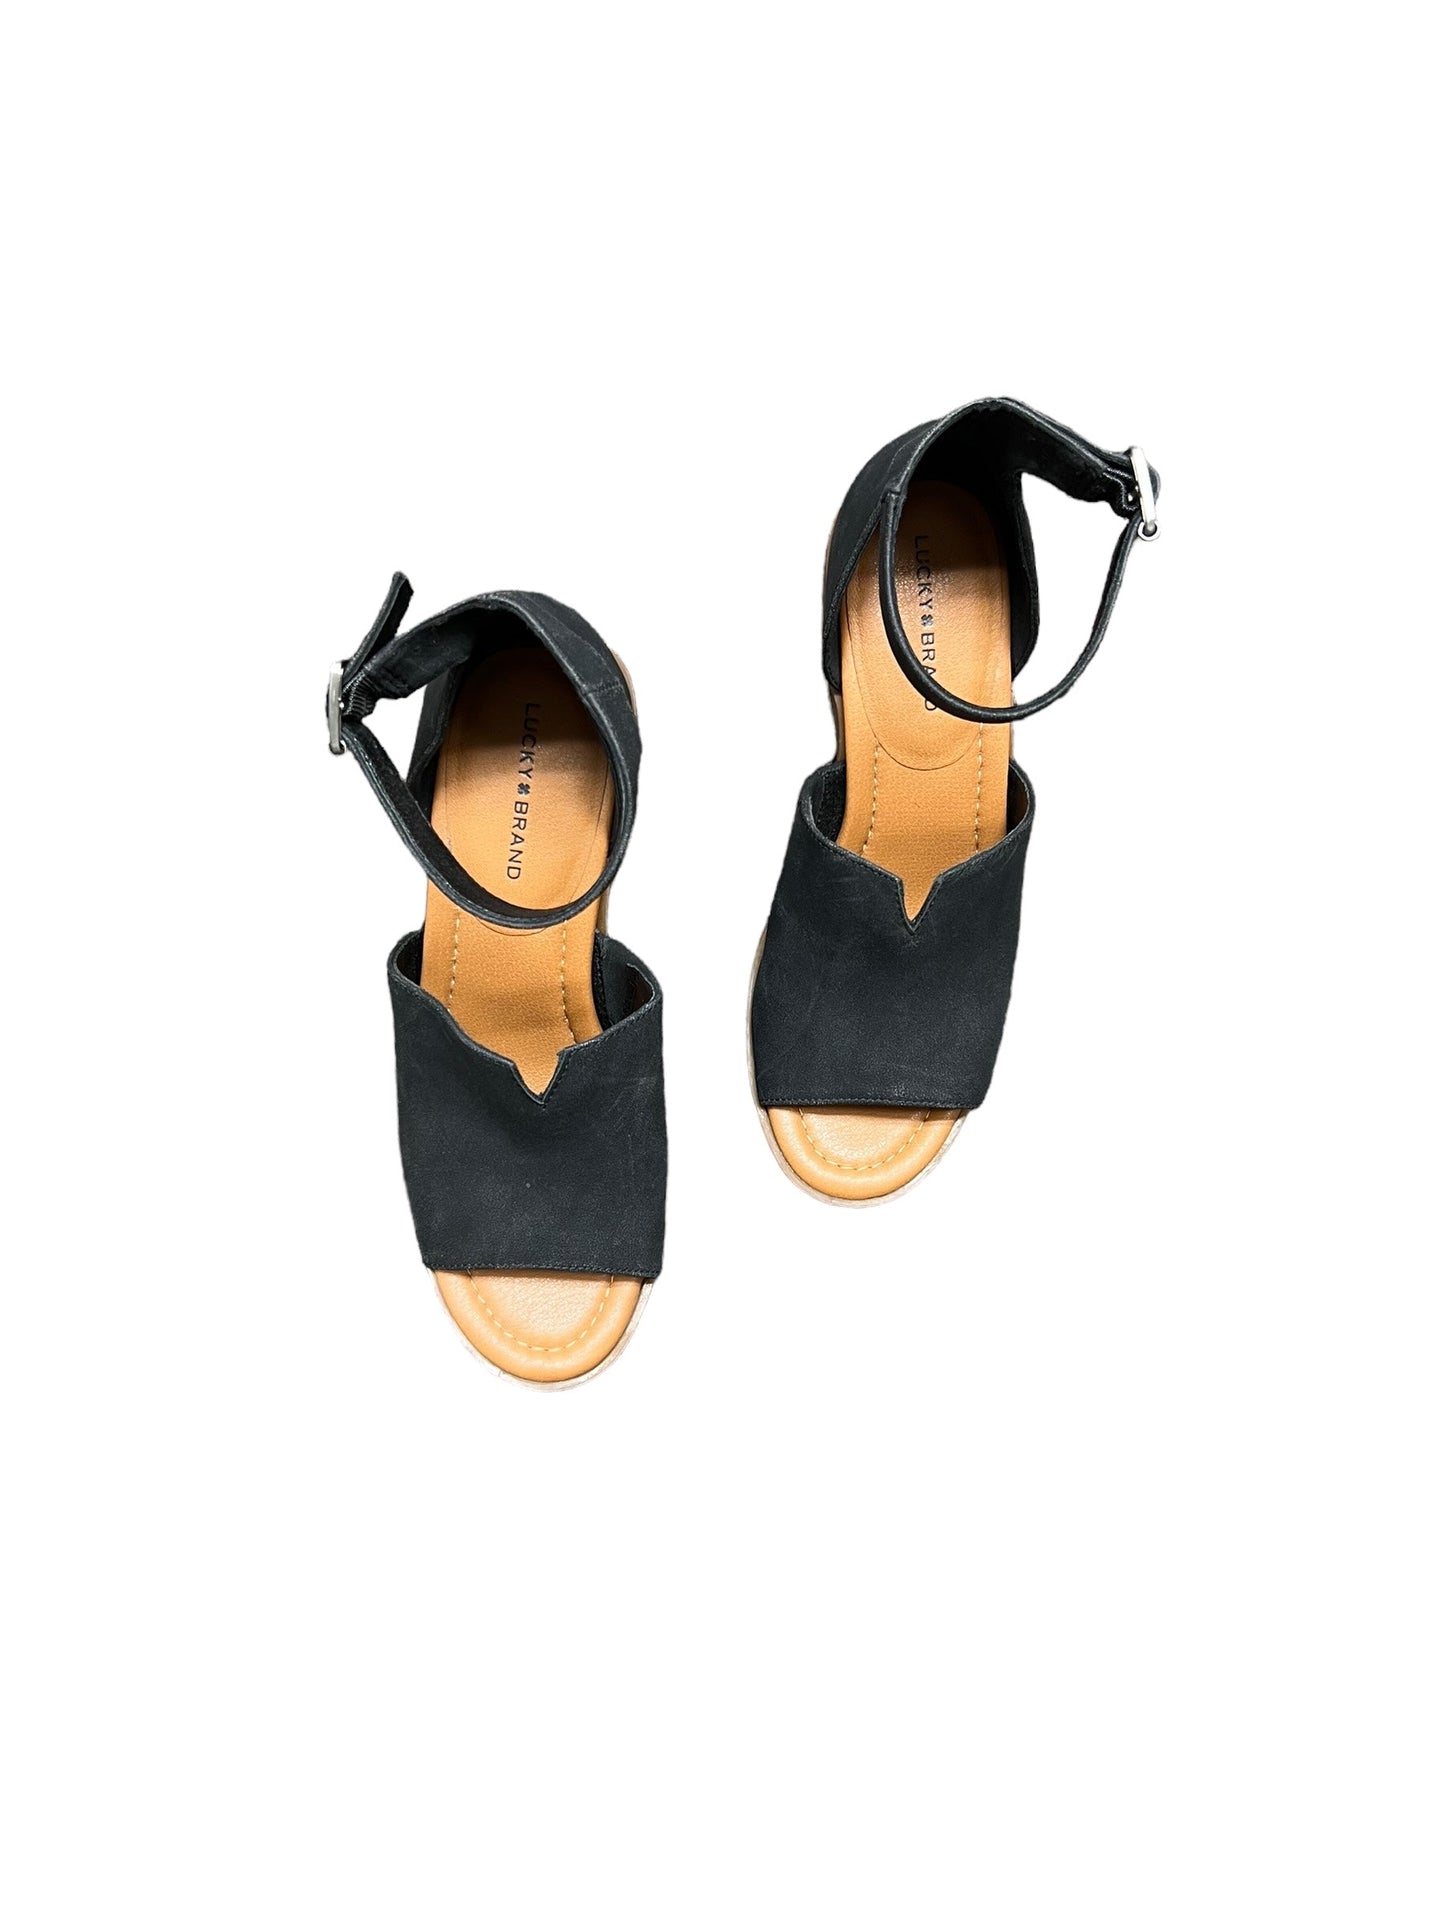 Black Sandals Heels Block Lucky Brand, Size 6.5